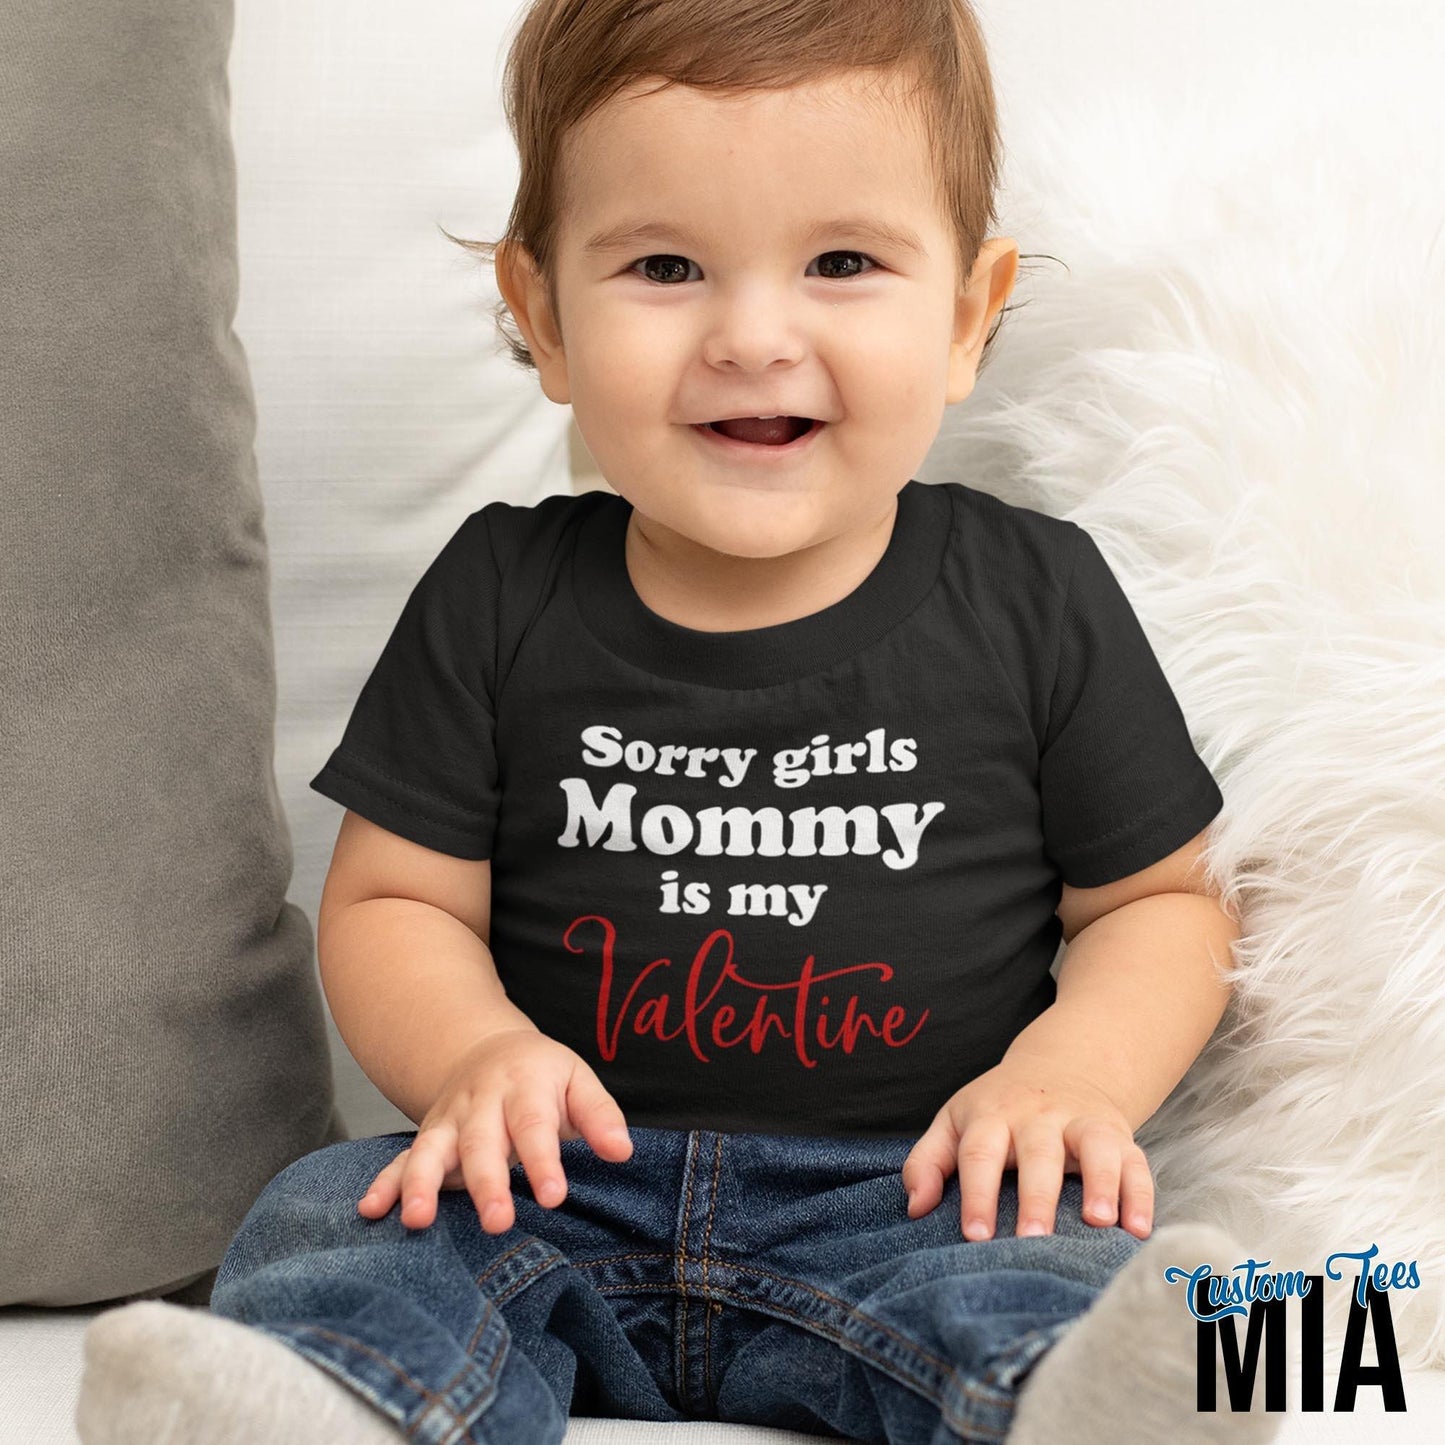 Sorry Girls Mommy is My Valentine Boys Valentine's Day Shirt - Custom Tees MIA